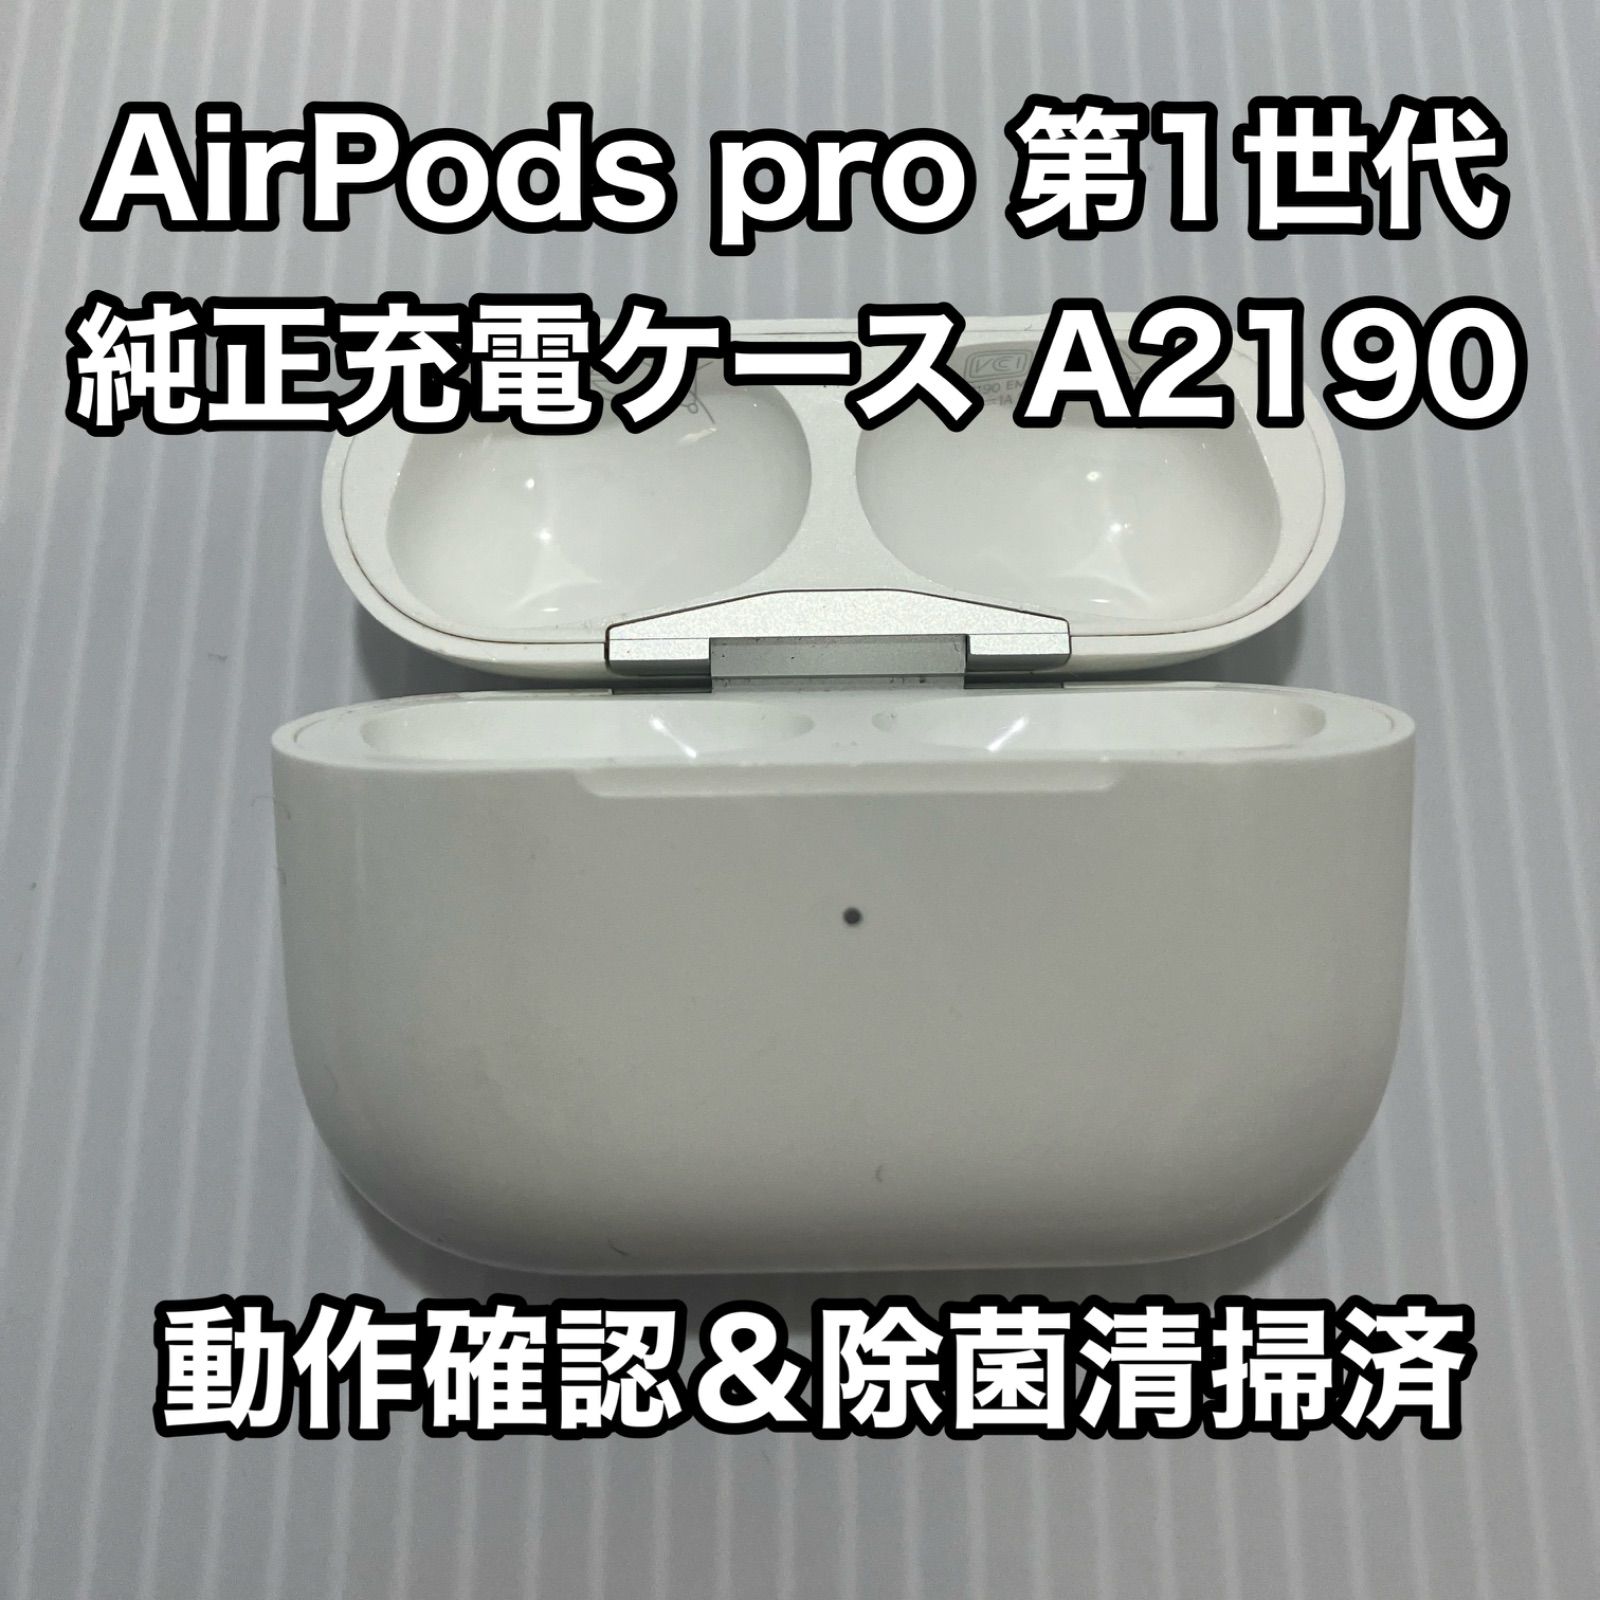 Apple純正 AirPods pro 充電ケース A2190 - 格安スマホ販売店 - メルカリ